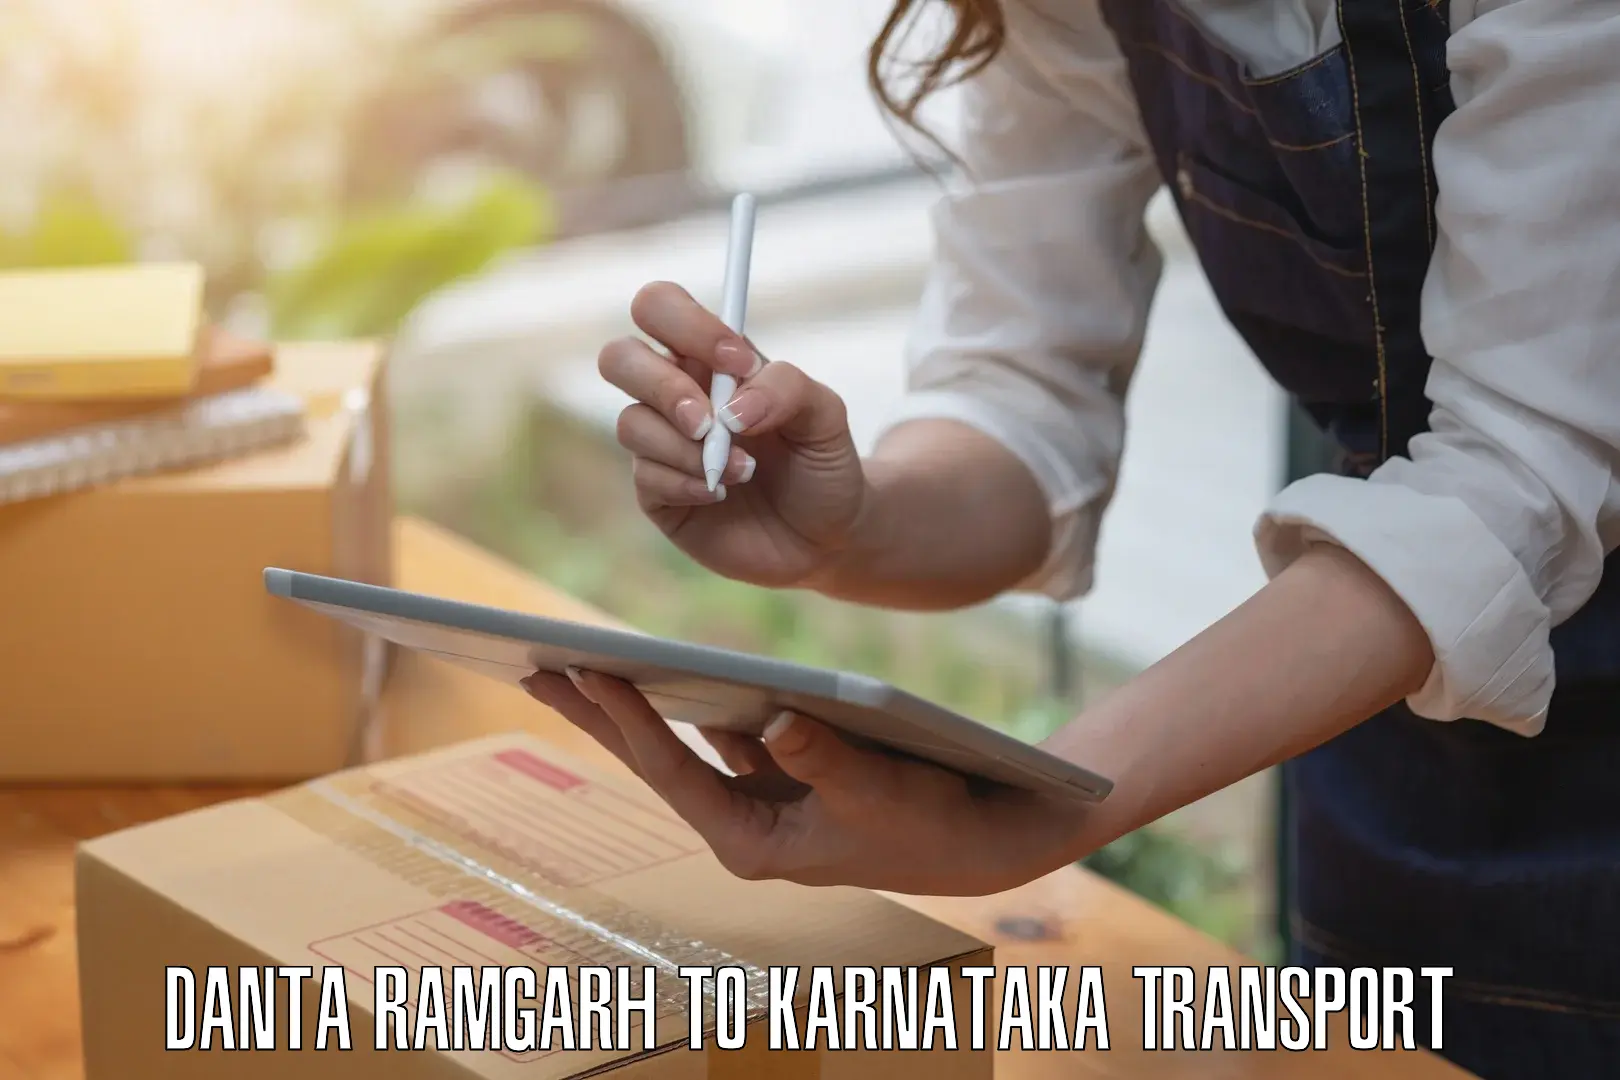 Nearest transport service Danta Ramgarh to Hosanagar